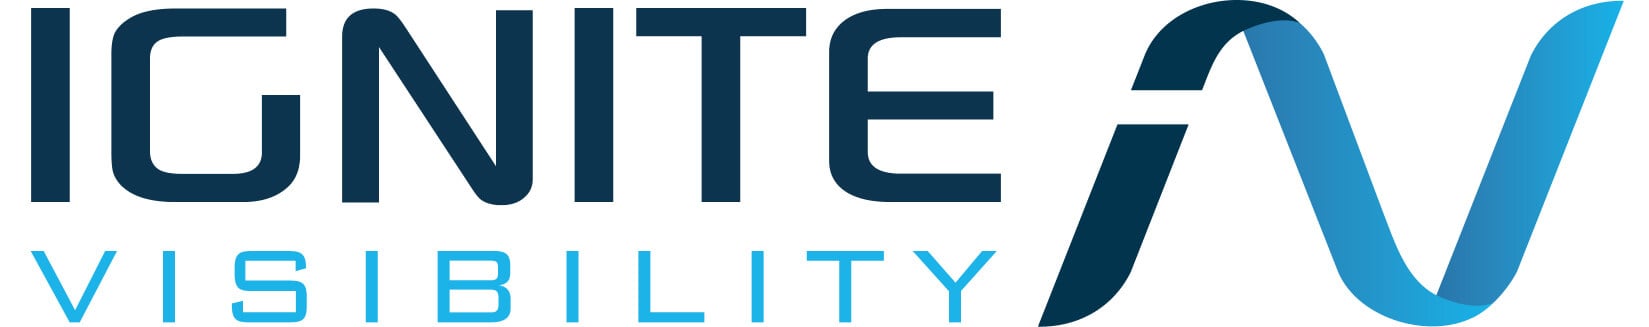 Best Dental SEO Business Logo: Ignite Visibility